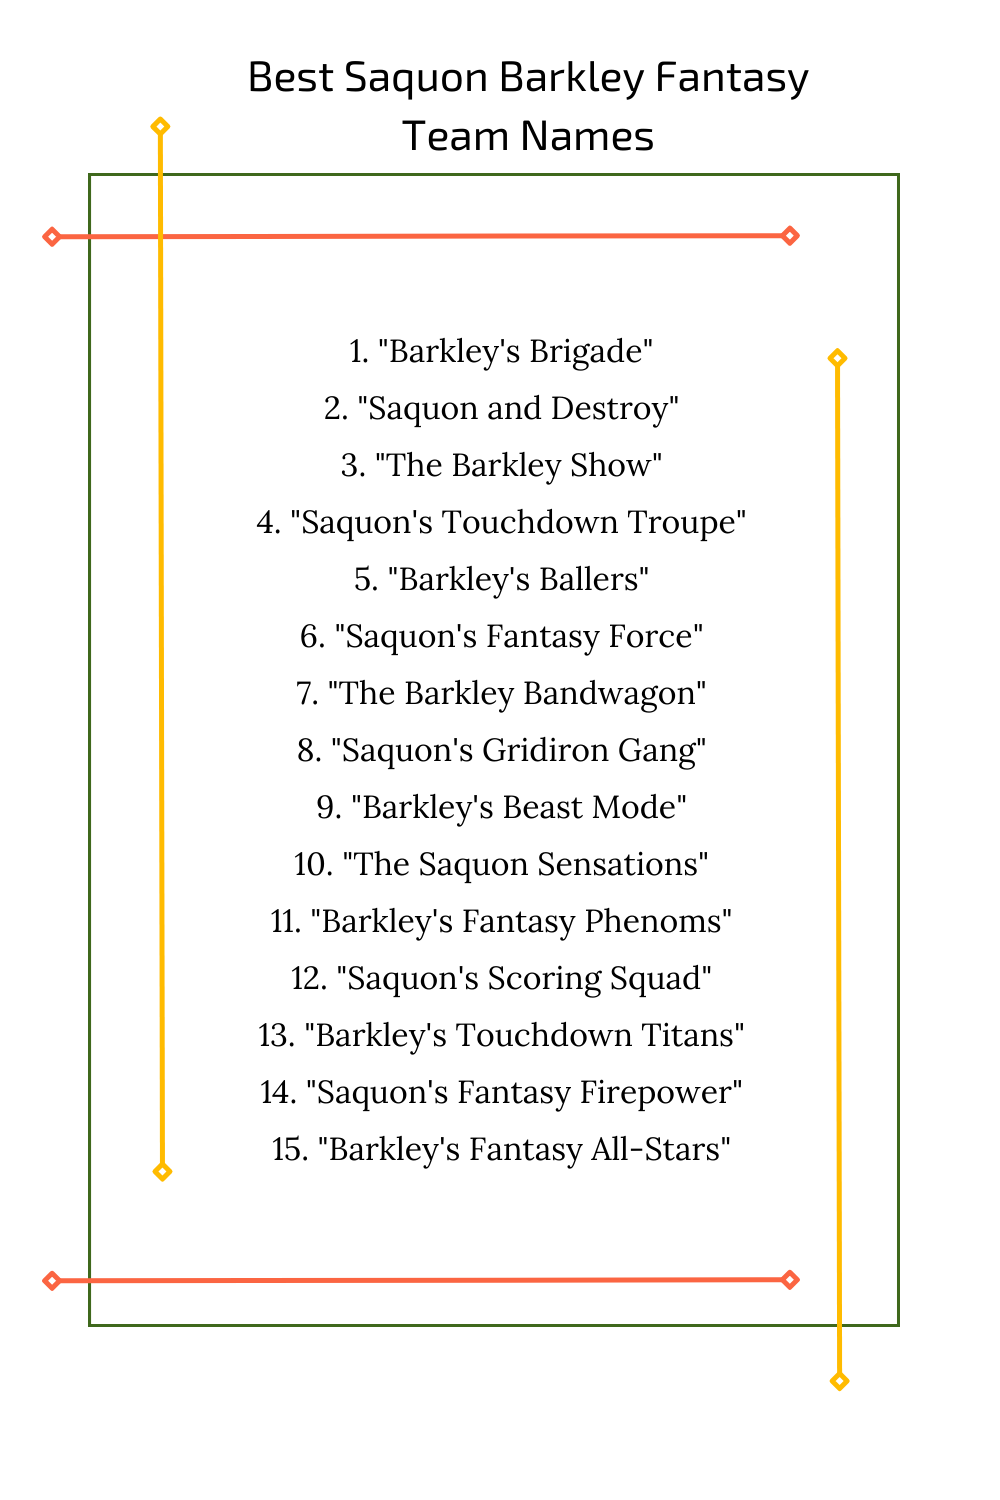 Best Saquon Barkley Fantasy Team Names